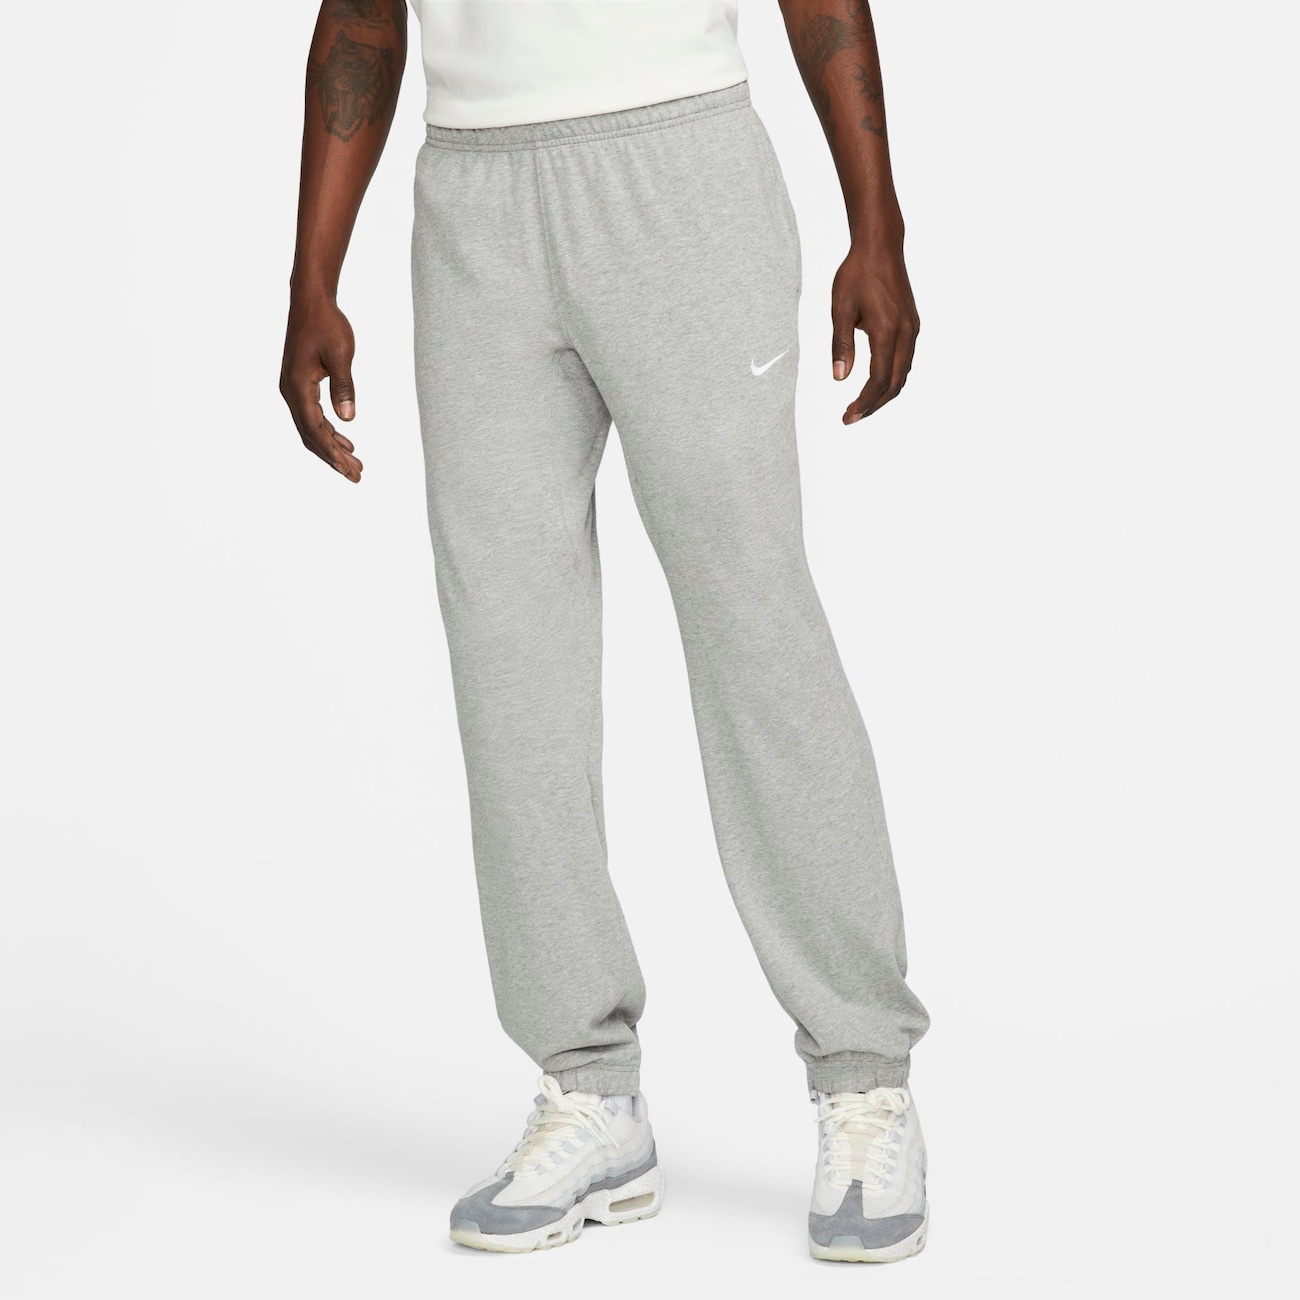 Calça Nike Sportswear Tech Fleece Jogger Masculina